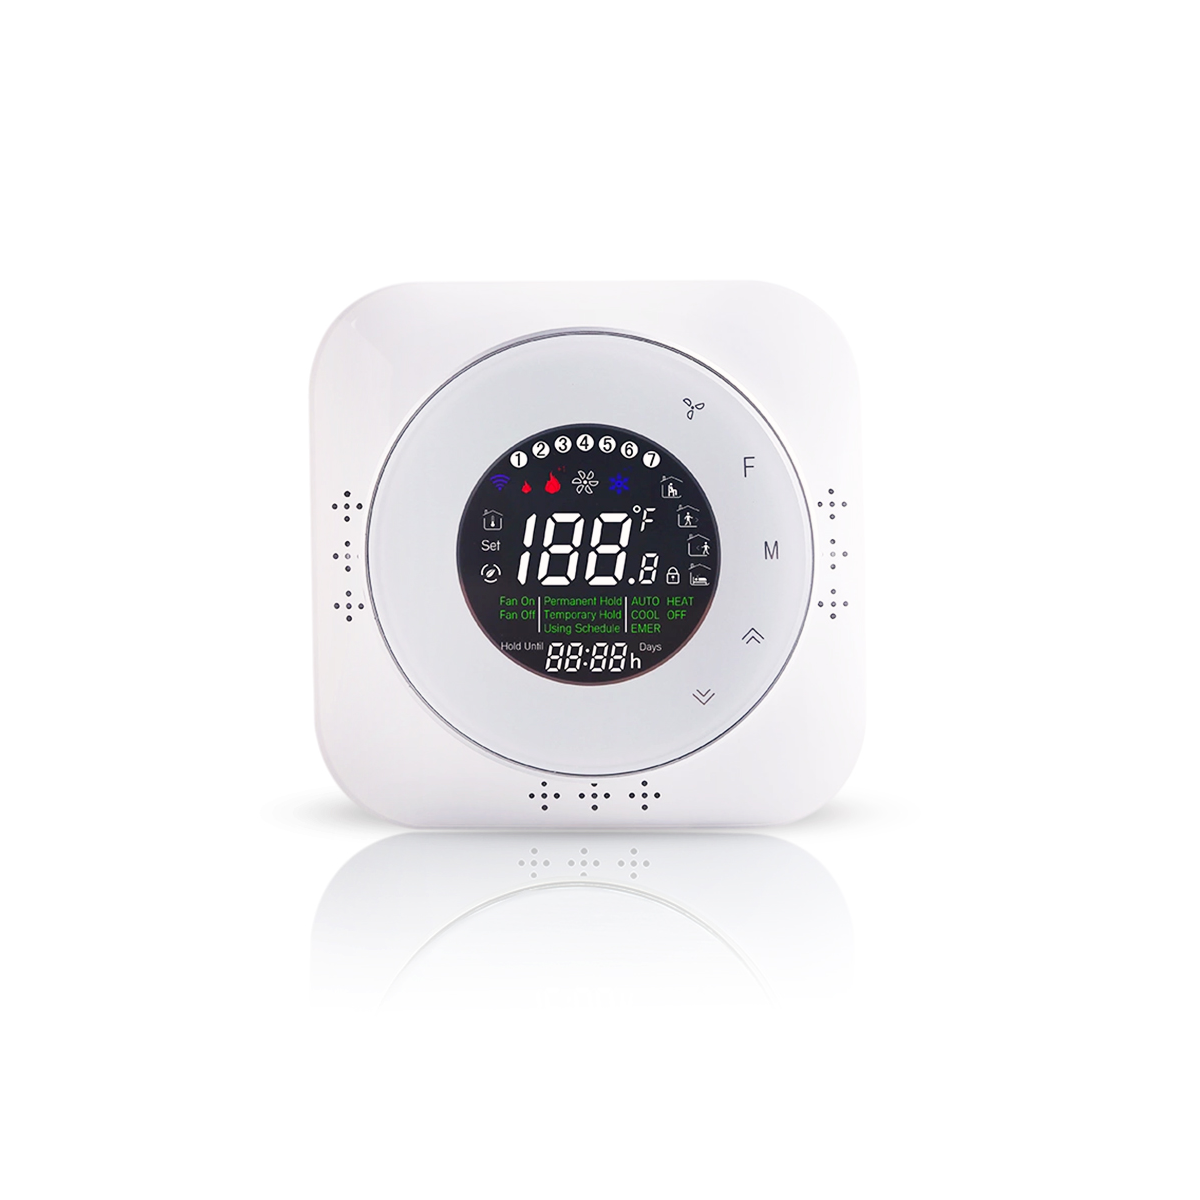 BHP-6000 Series Heat Pump Thermostat